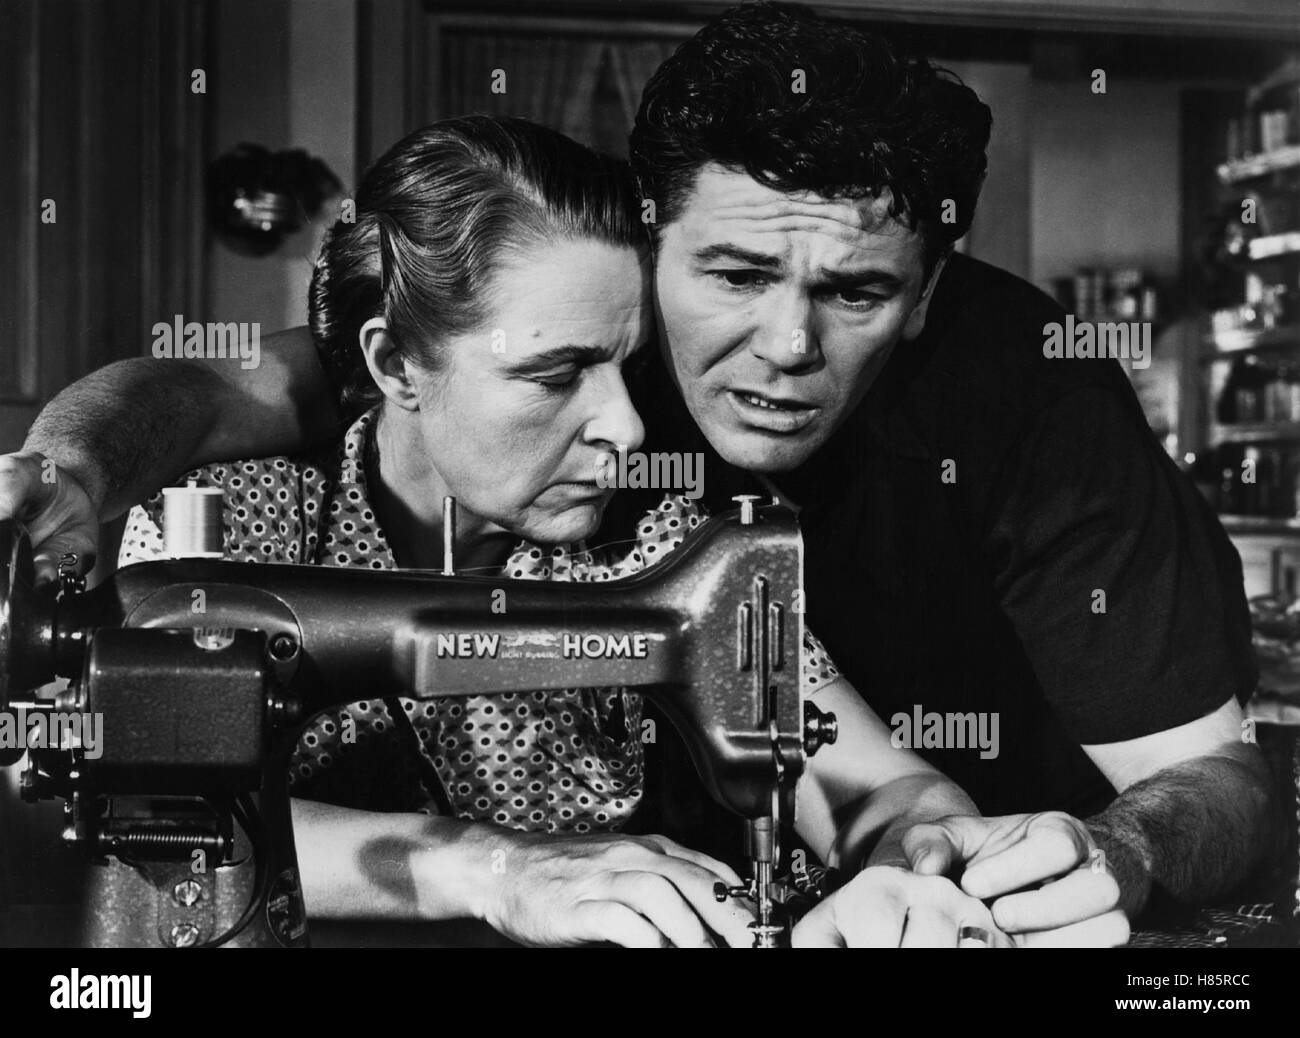 Steckbrief 7-73, (CORREVA TUTTO IL MODO) USA 1951 s/w, Regie: John Berry, SELENA ROYLE, John Garfield, Stichwort: Nähmaschine Foto Stock